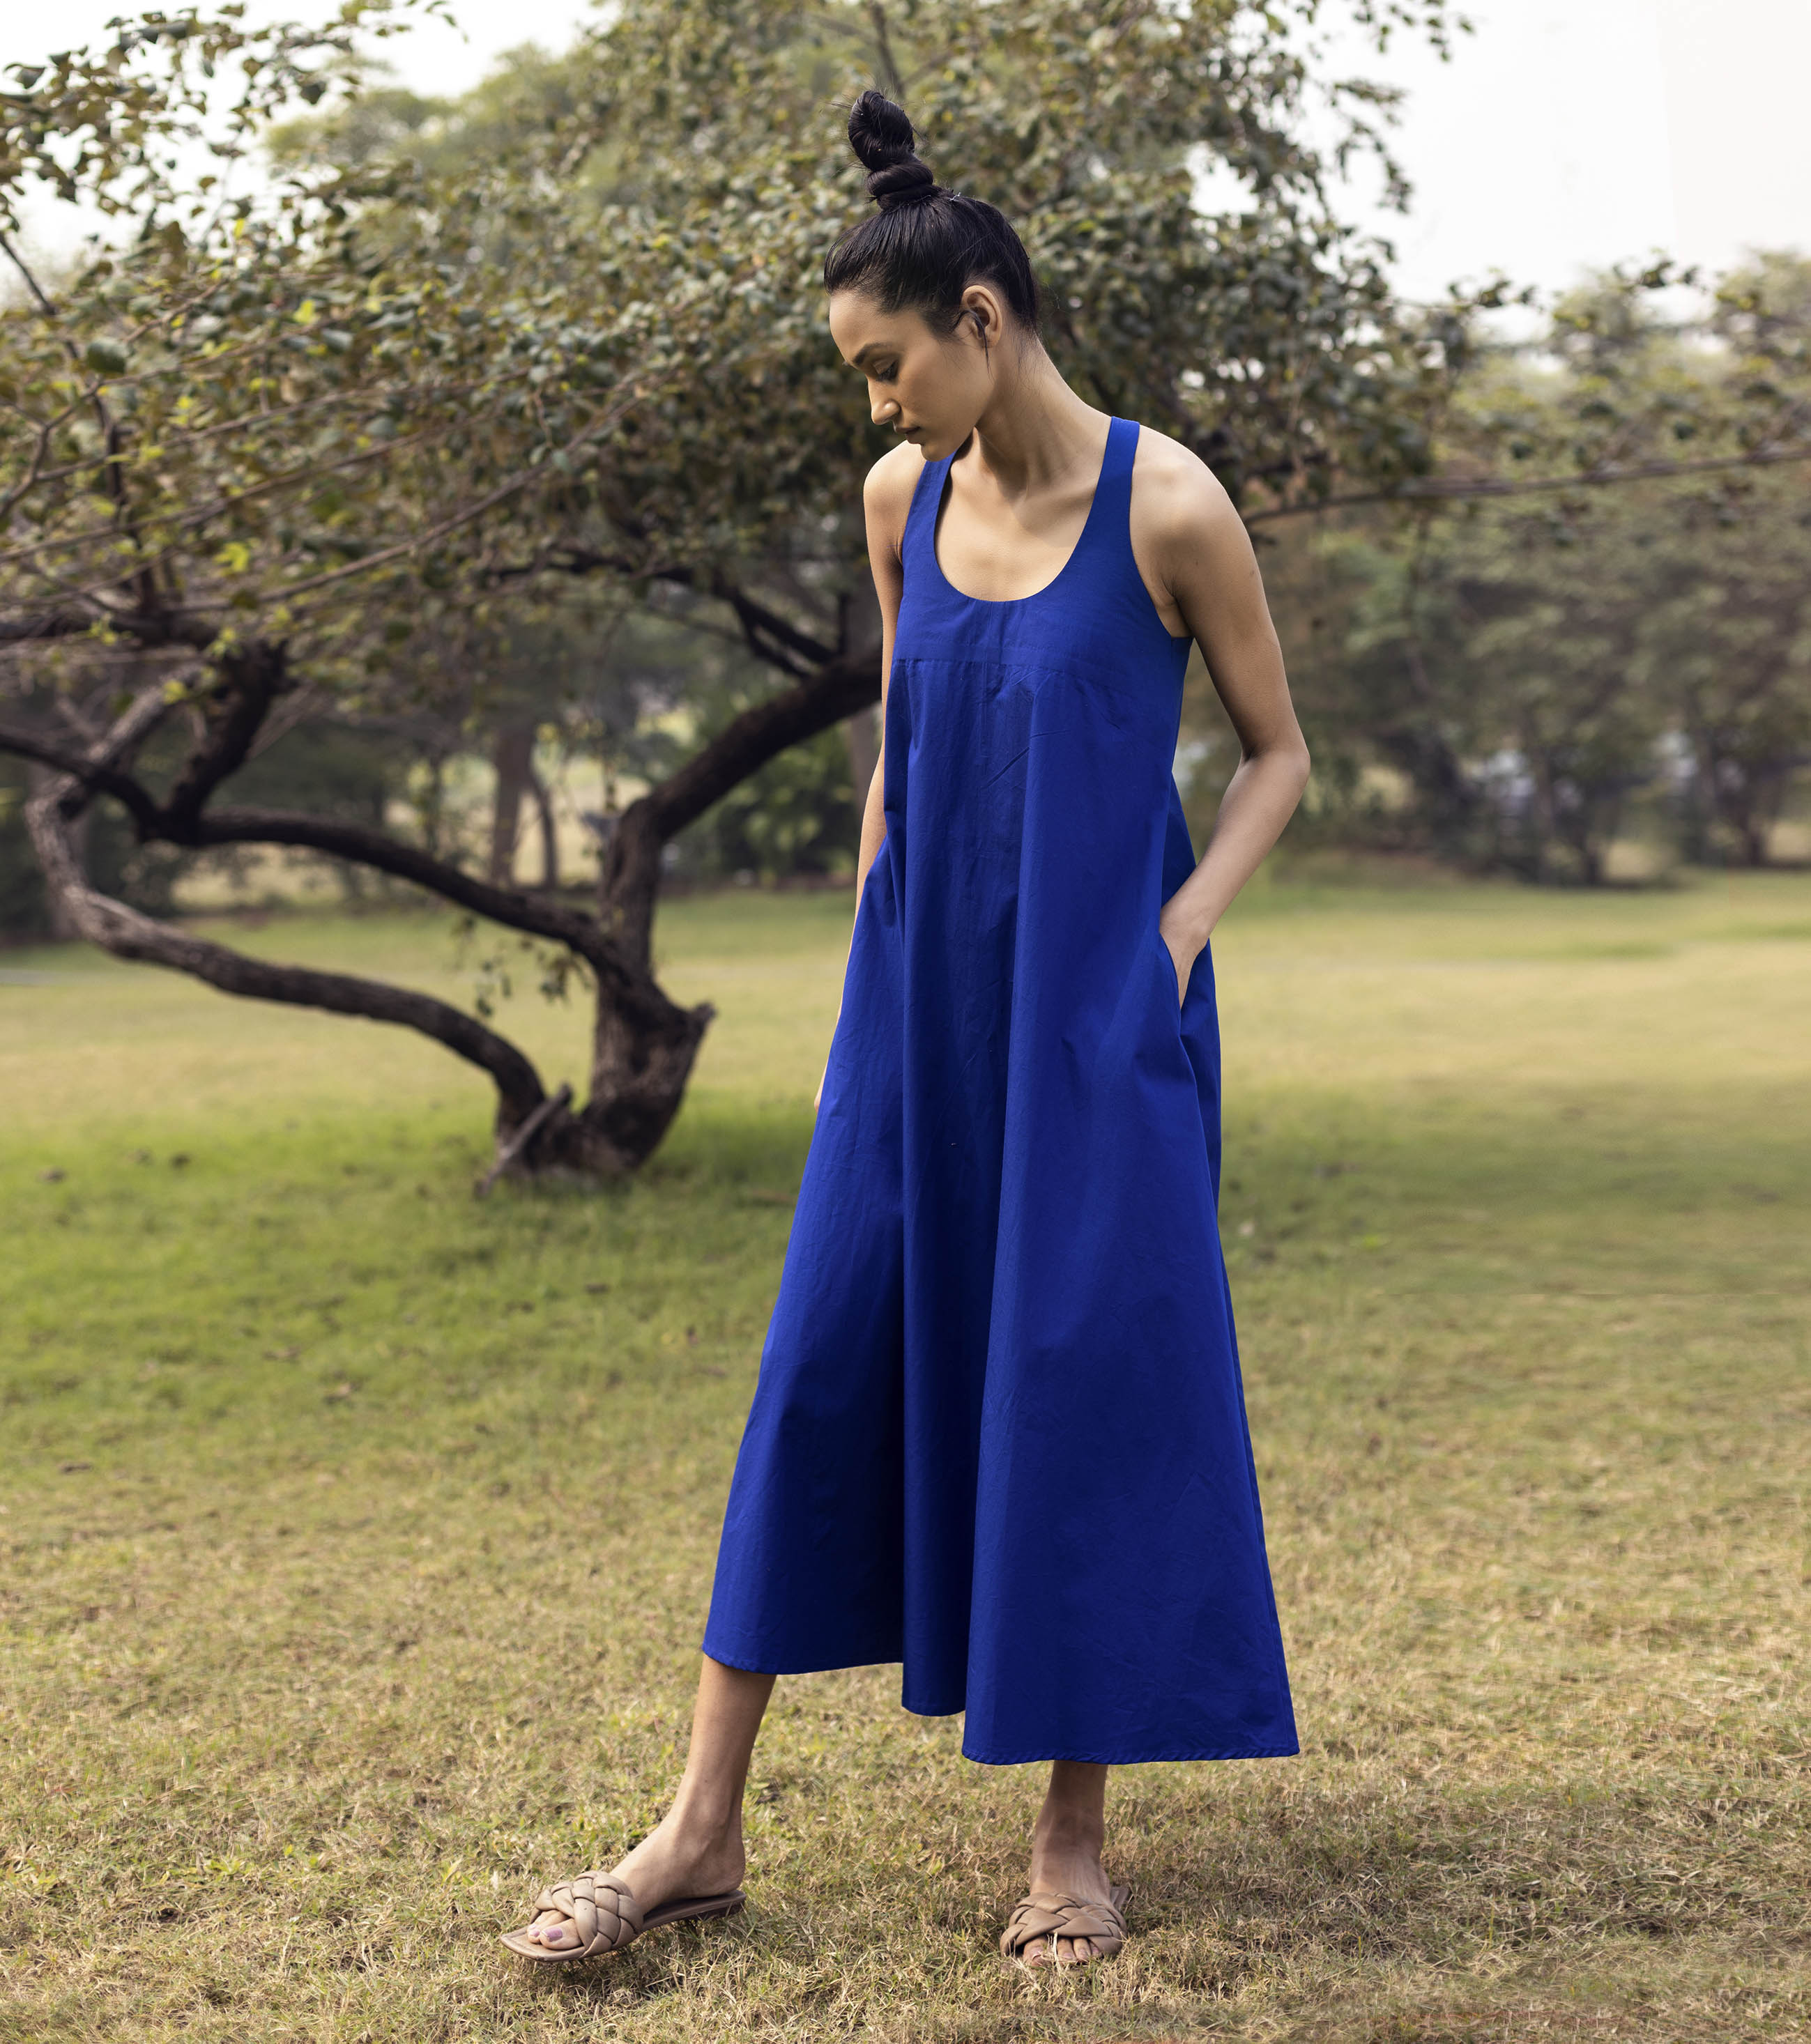 Blue Sleeveless Midi Dress